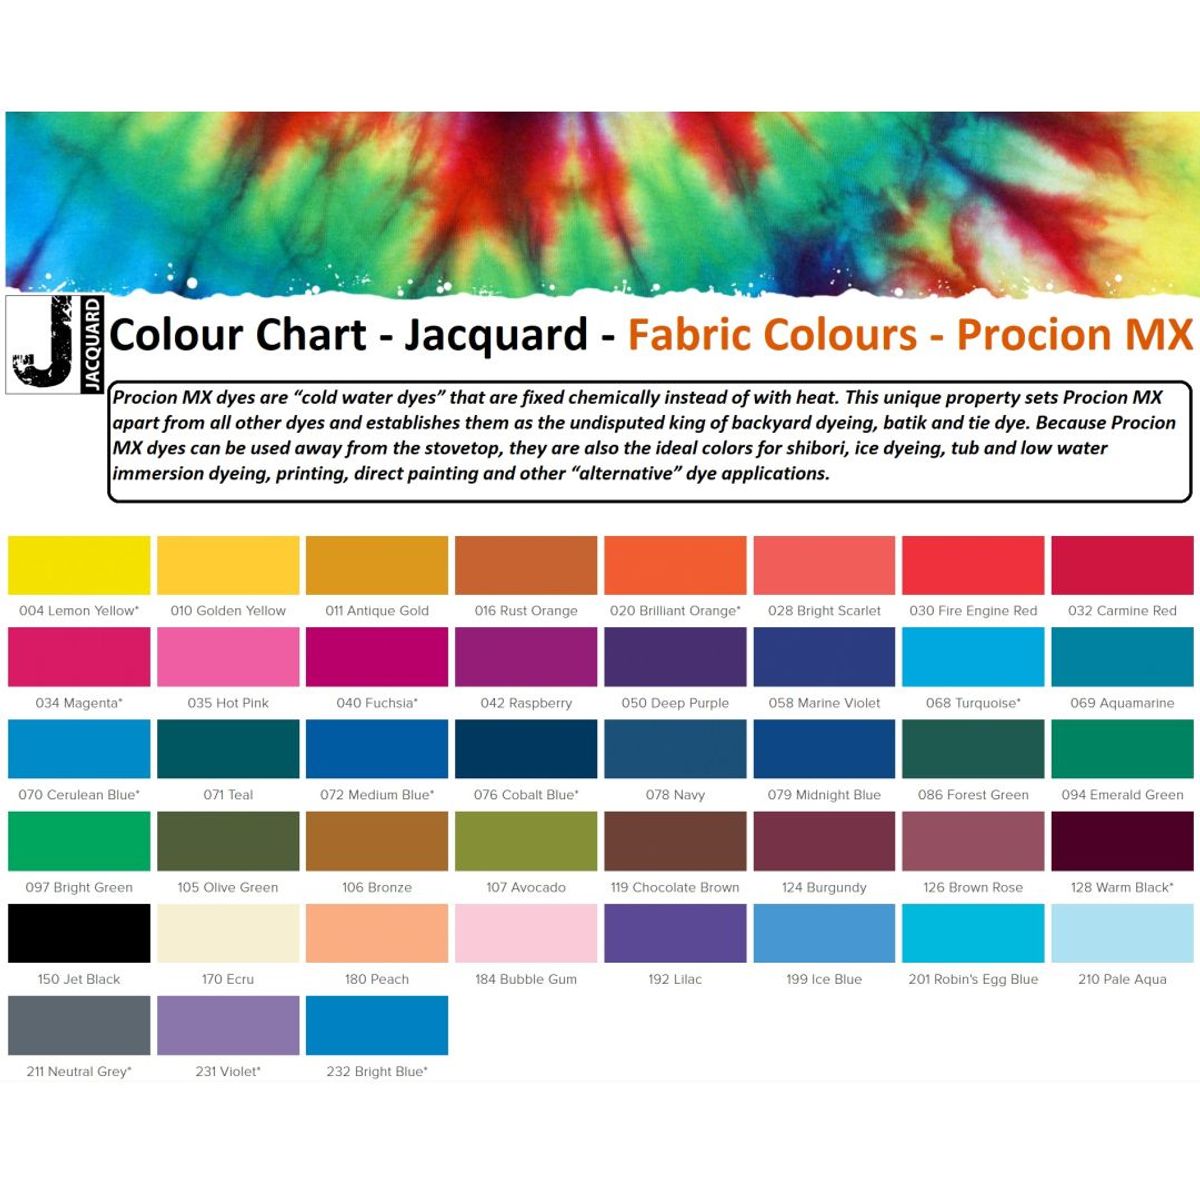 Jacquard - Procion MX Dye - Fabric Textile - Cerulan Blue 070